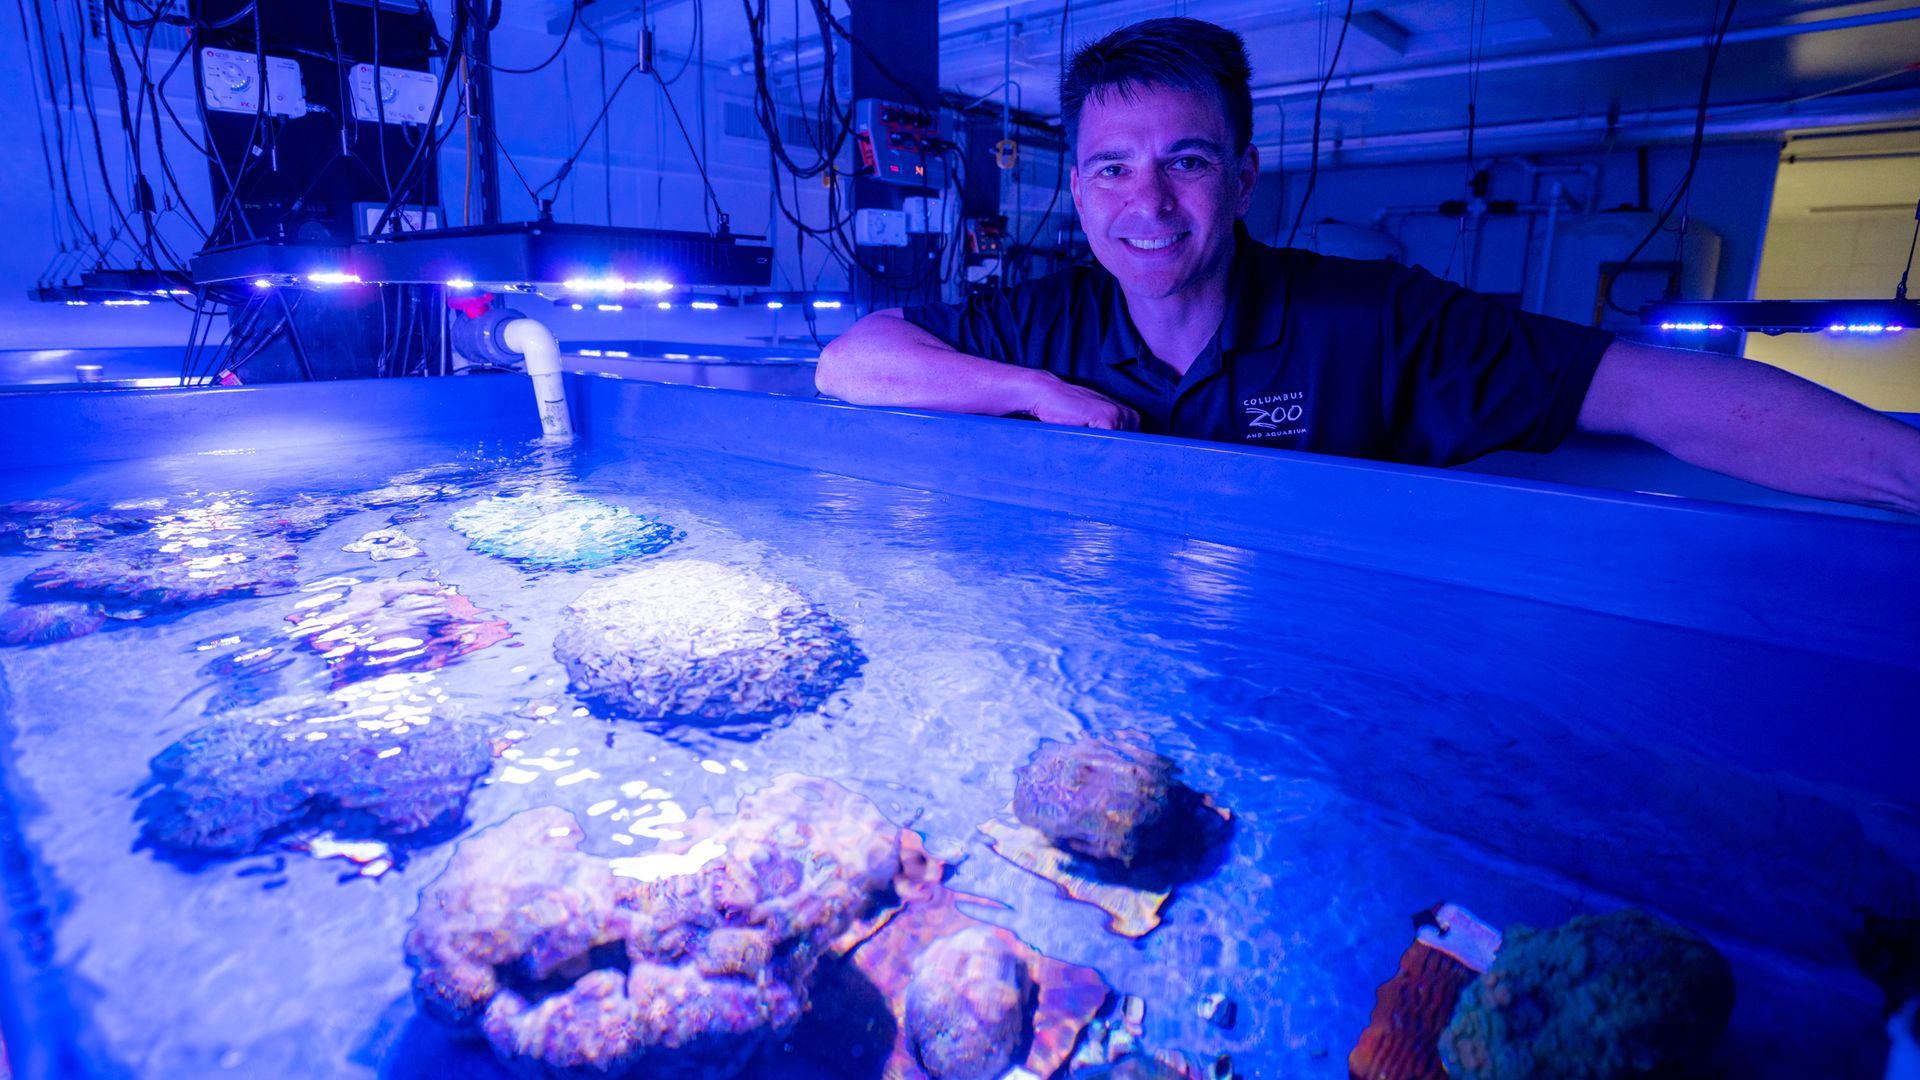 Ramon Villaverde stands above a large fiberglass tub full of coral specimens